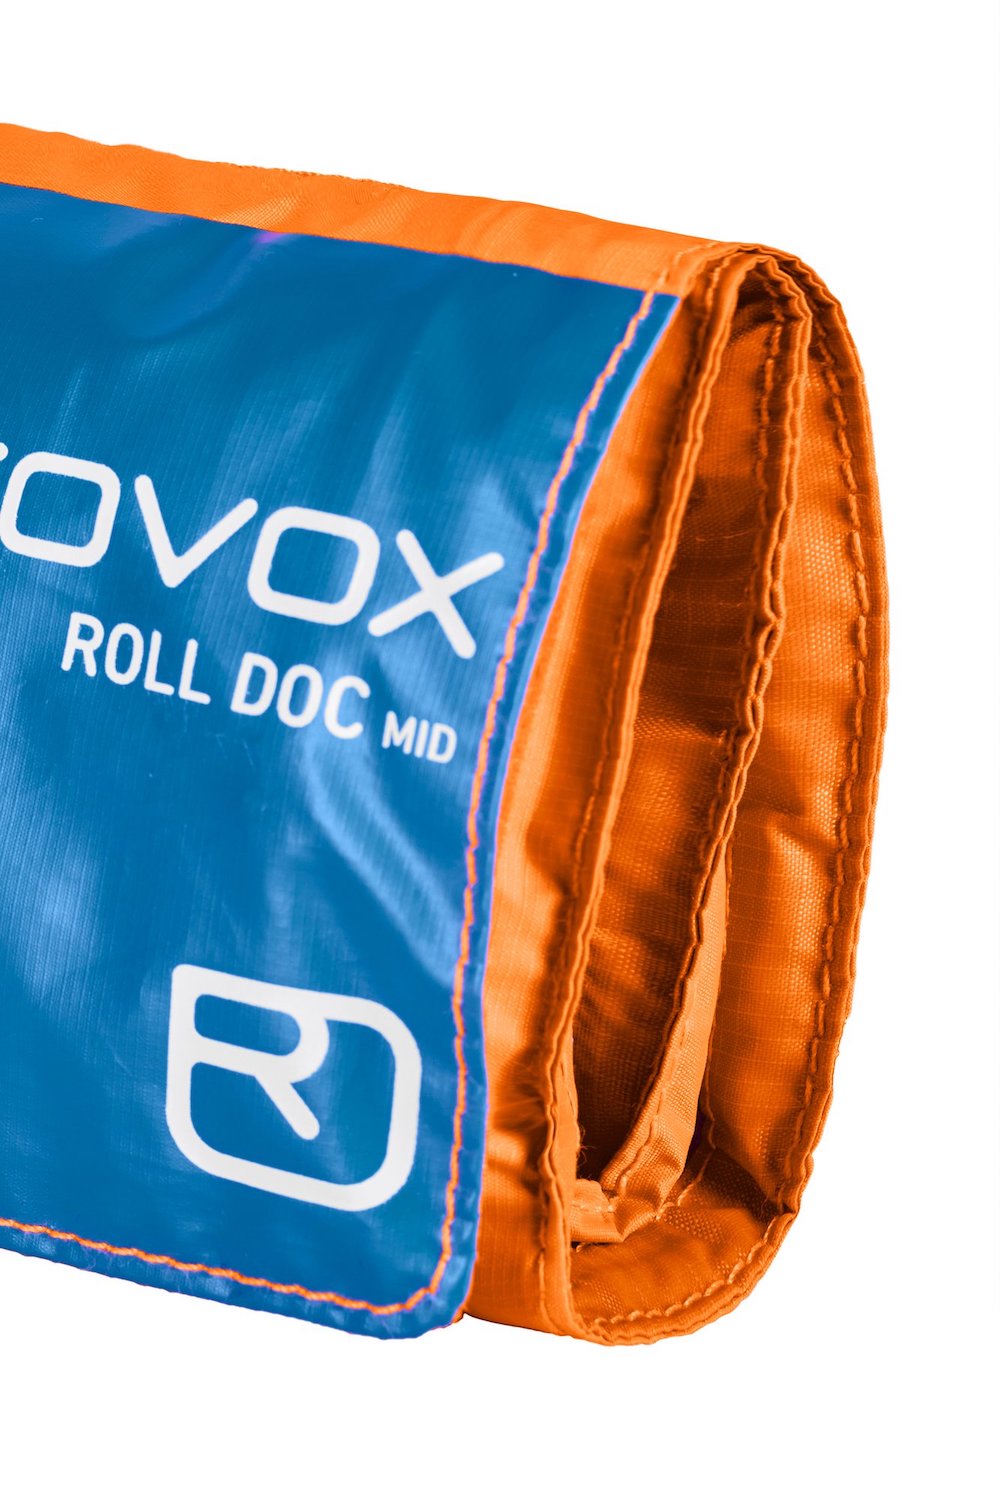 Ortovox - First Aid Roll Doc Mid, Erste-Hilfe-Set